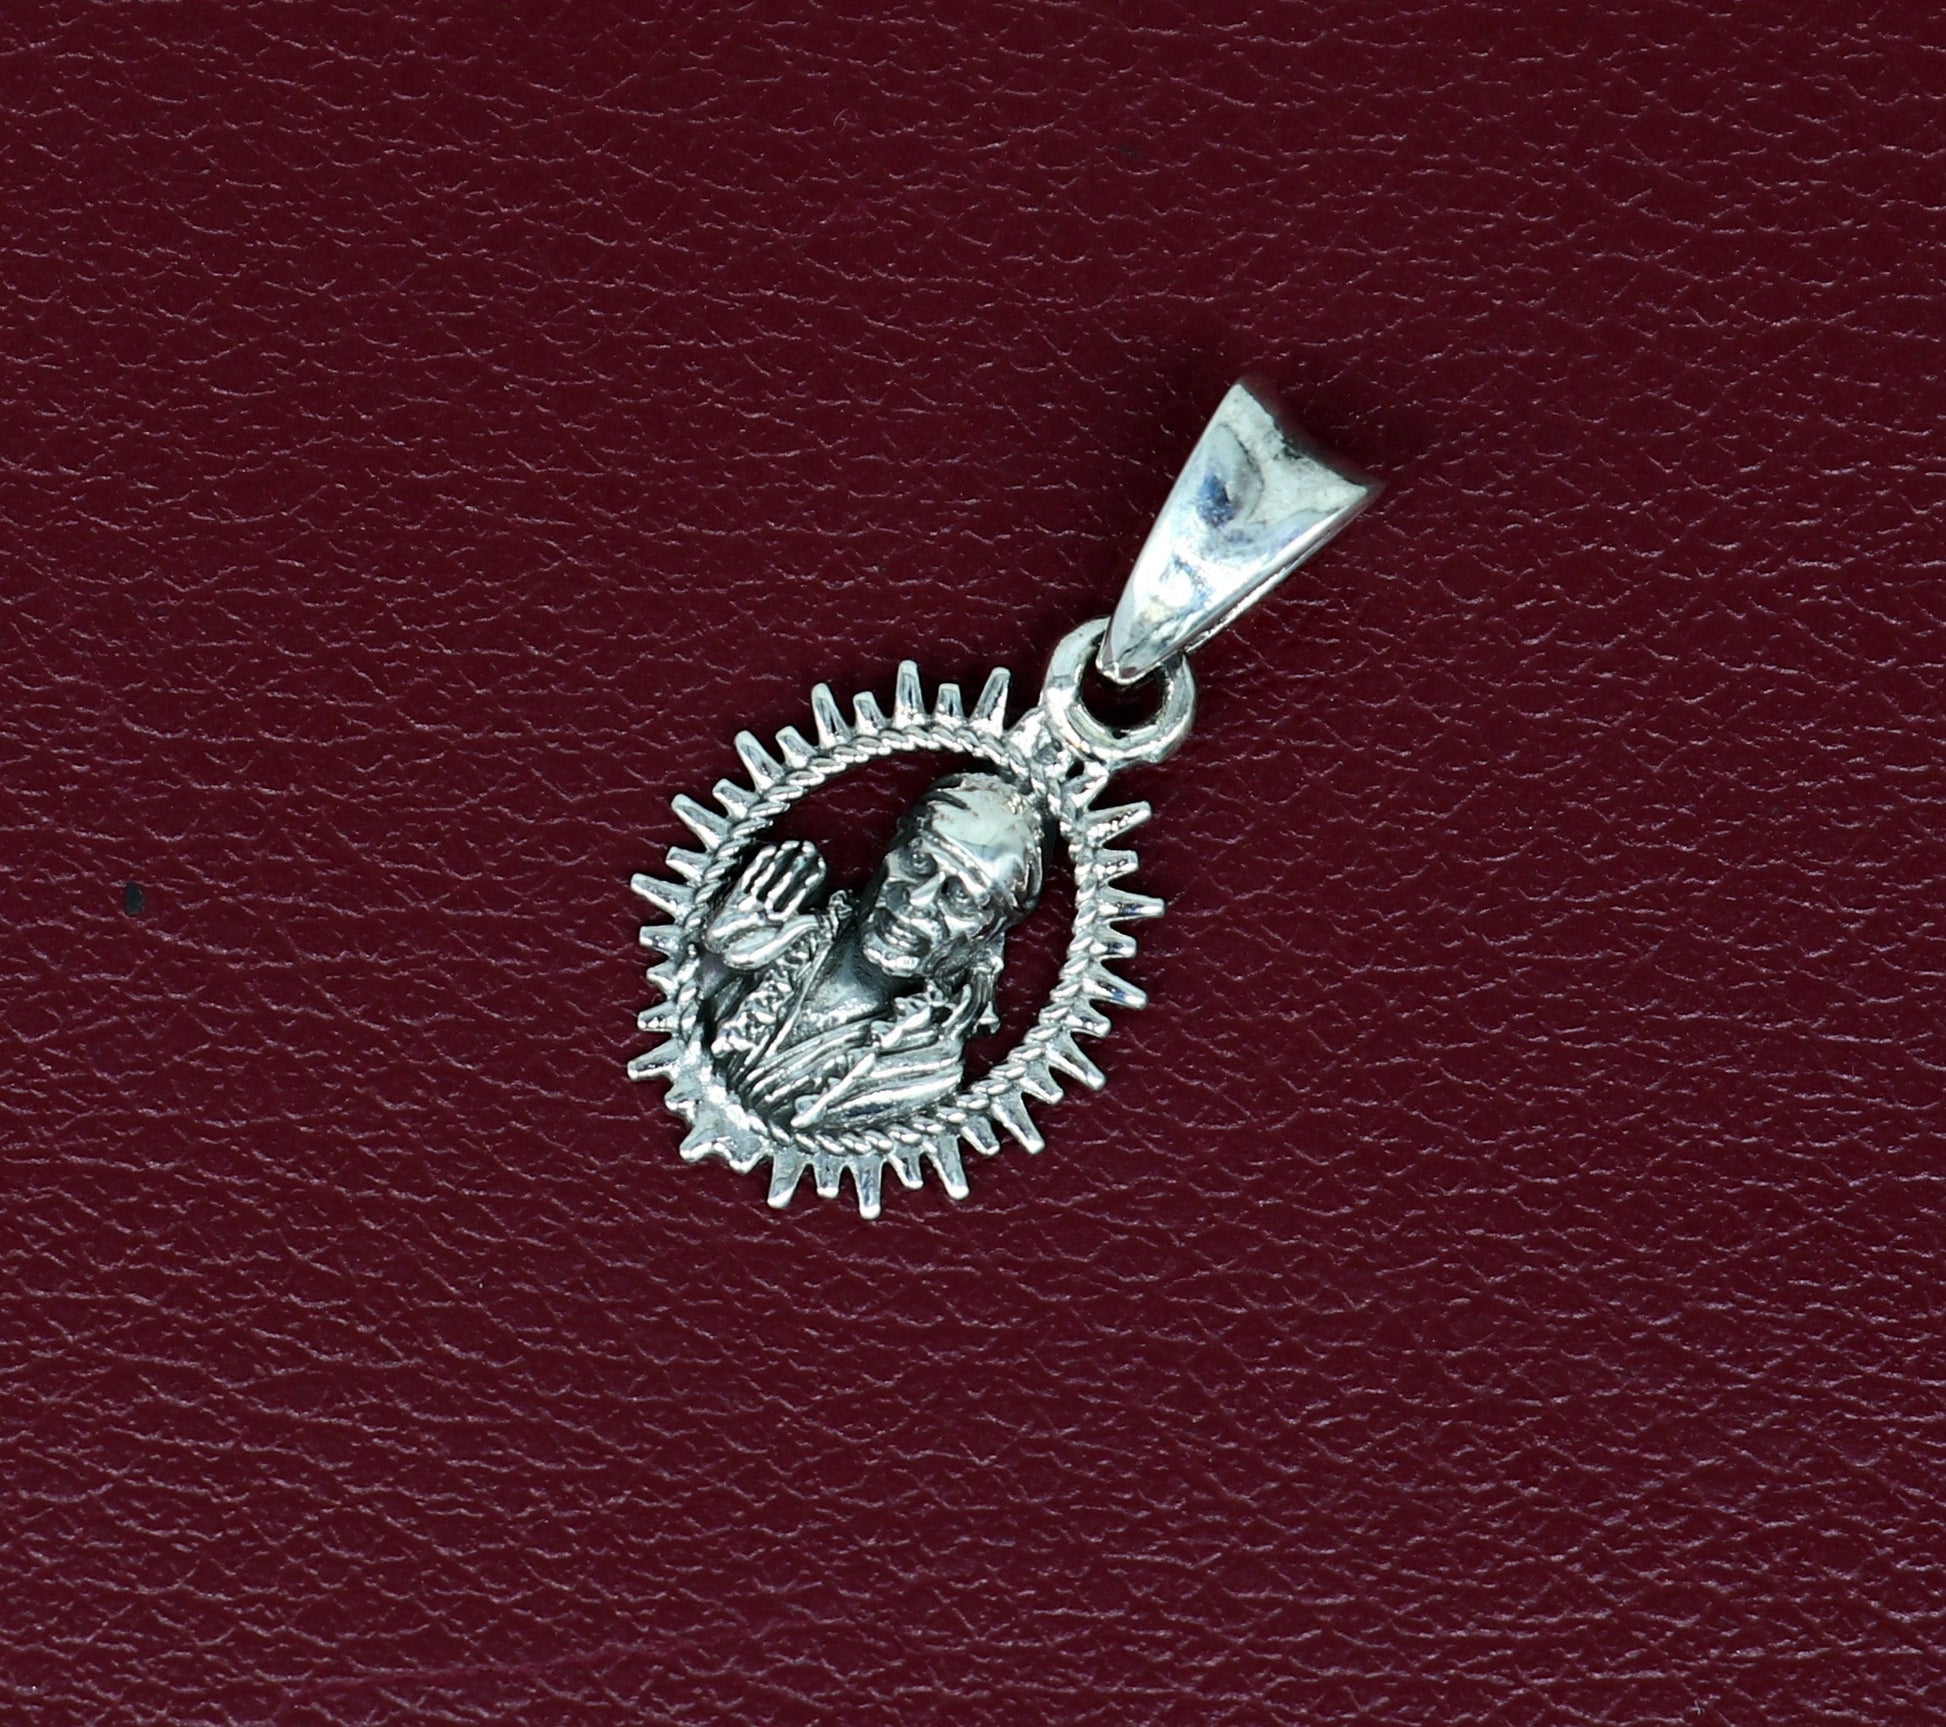 925 sterling silver handmade Indian idol Sai Baba pendant, amazing stylish unisex pendant locket personalized jewelry tribal jewelry ssp518 - TRIBAL ORNAMENTS